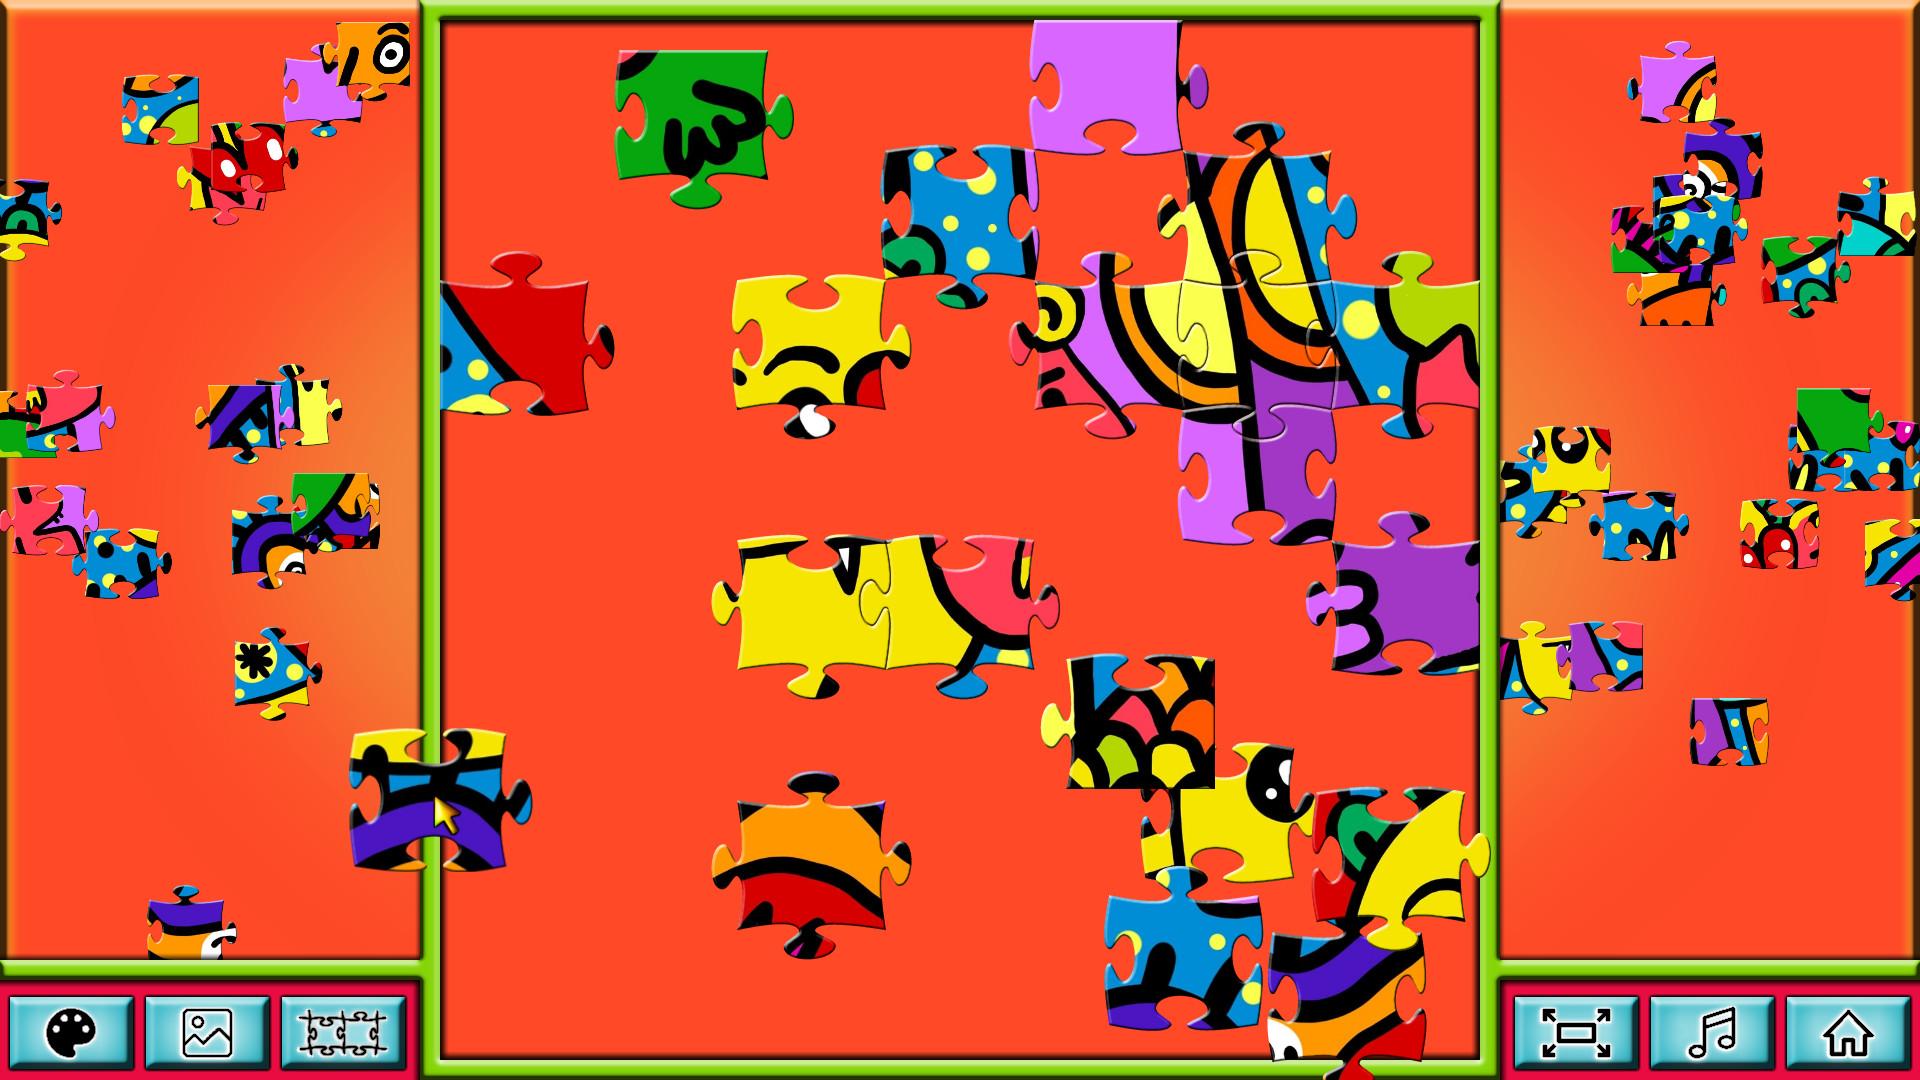 Screenshot №3 from game Pixel Puzzles Junior Jigsaw